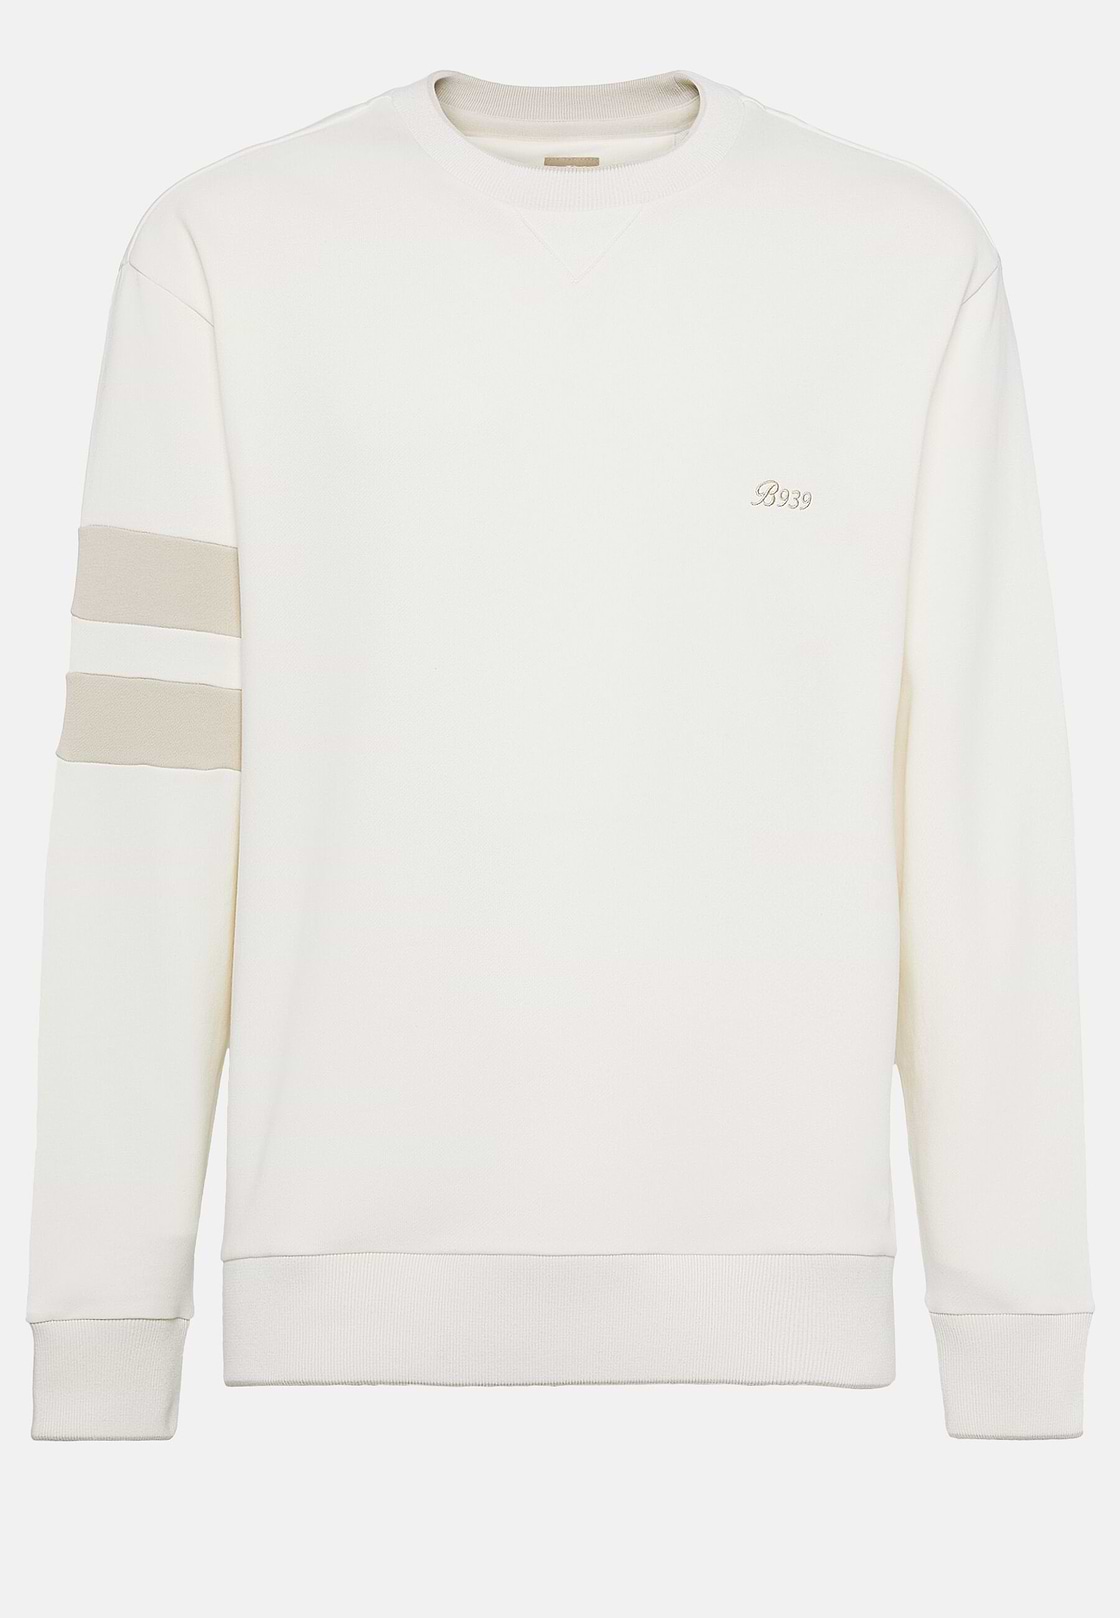 Crew Neck Sweatshirt In Organic Cotton Blend, White, hi-res